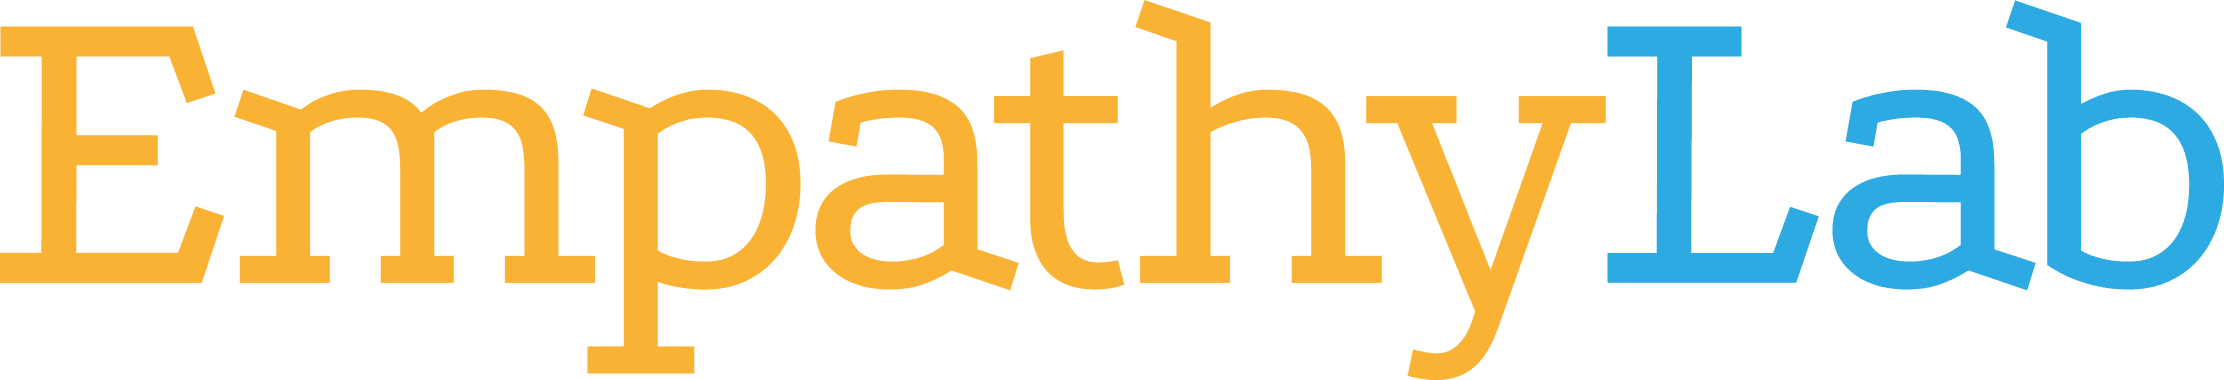 empathylab-logo-2224x380-640w.png